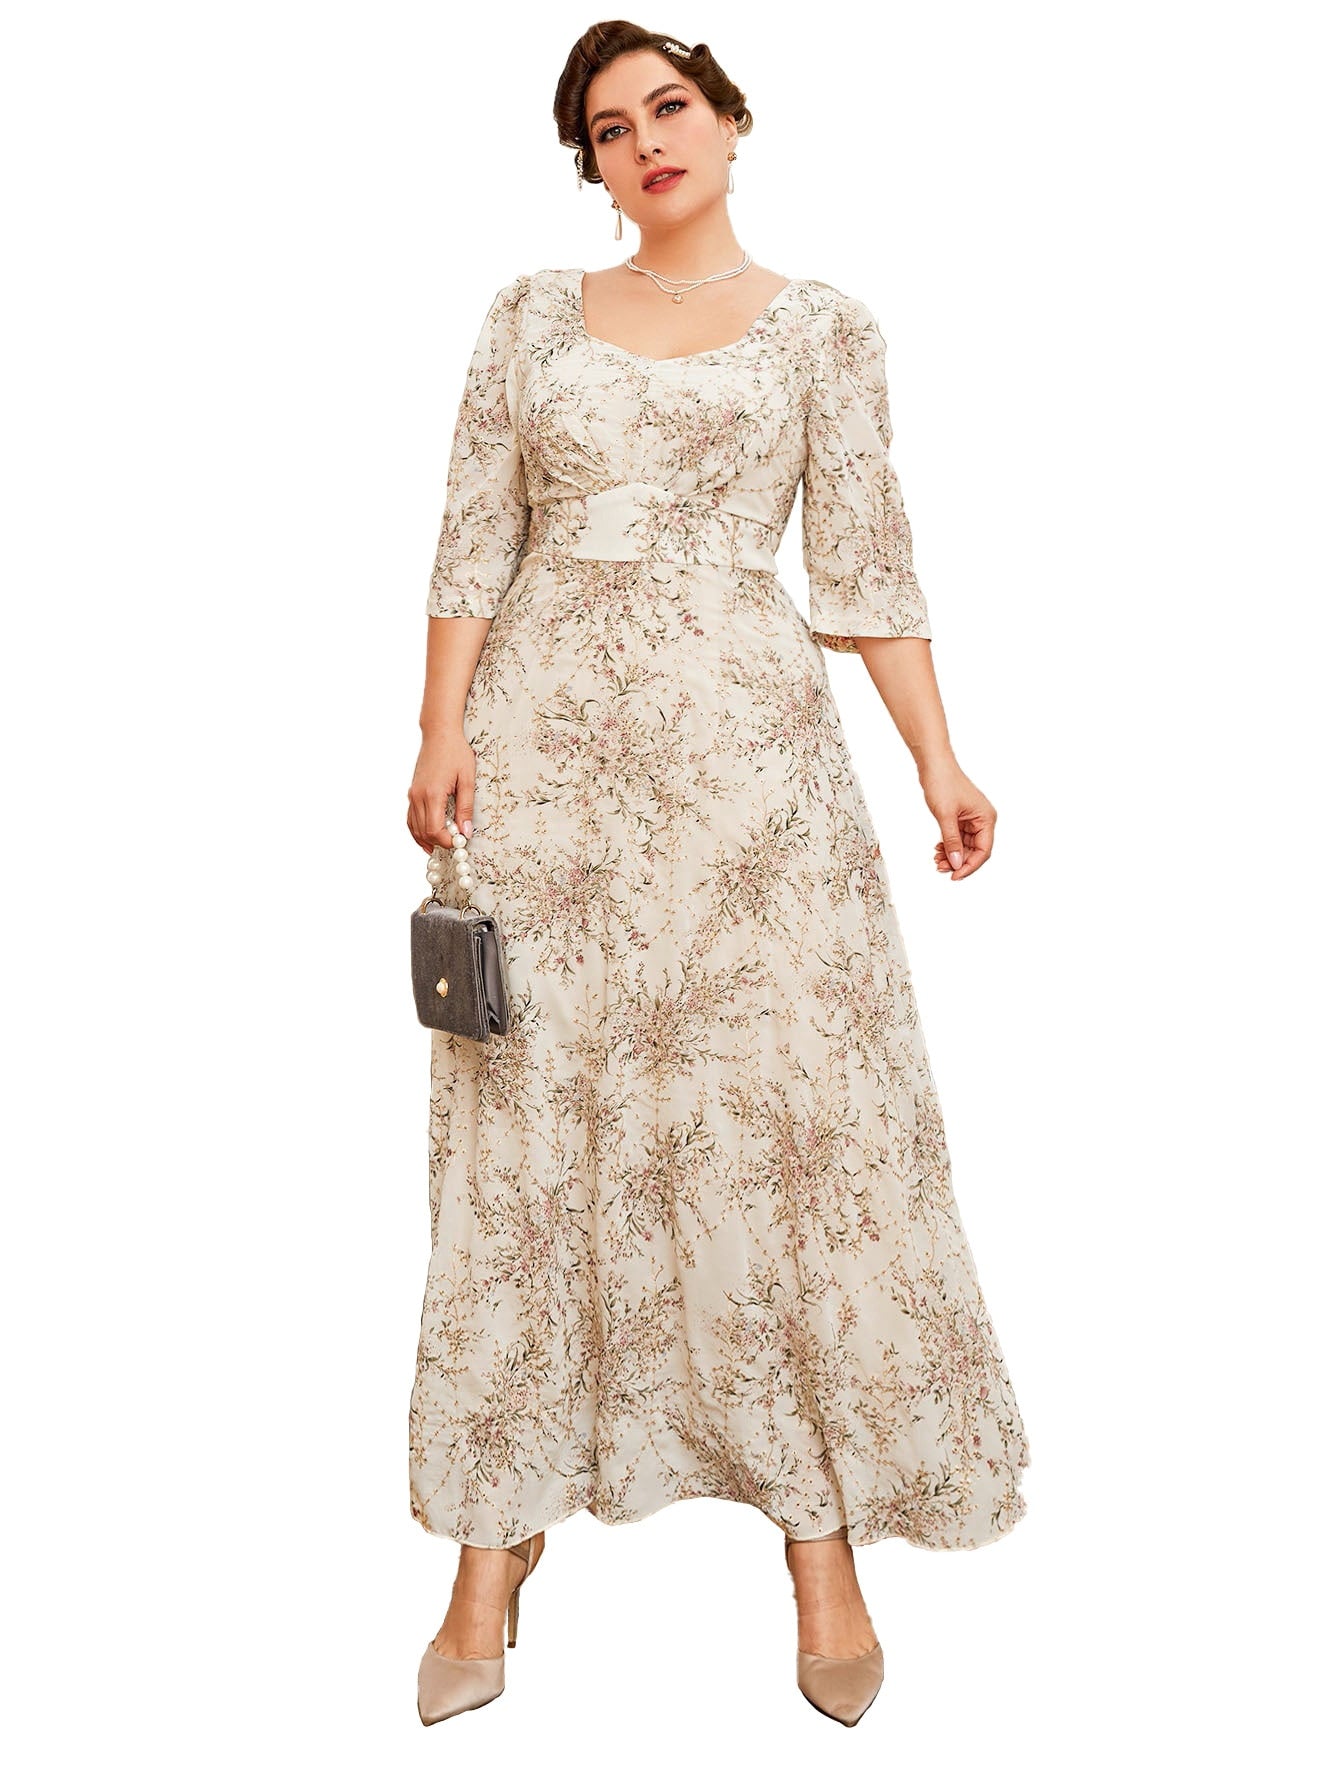 Plus Size Women's Dress Fashion Waist Middle Sleeve Square Neck Print Dress Casual Loose Elegant Dress Large Women